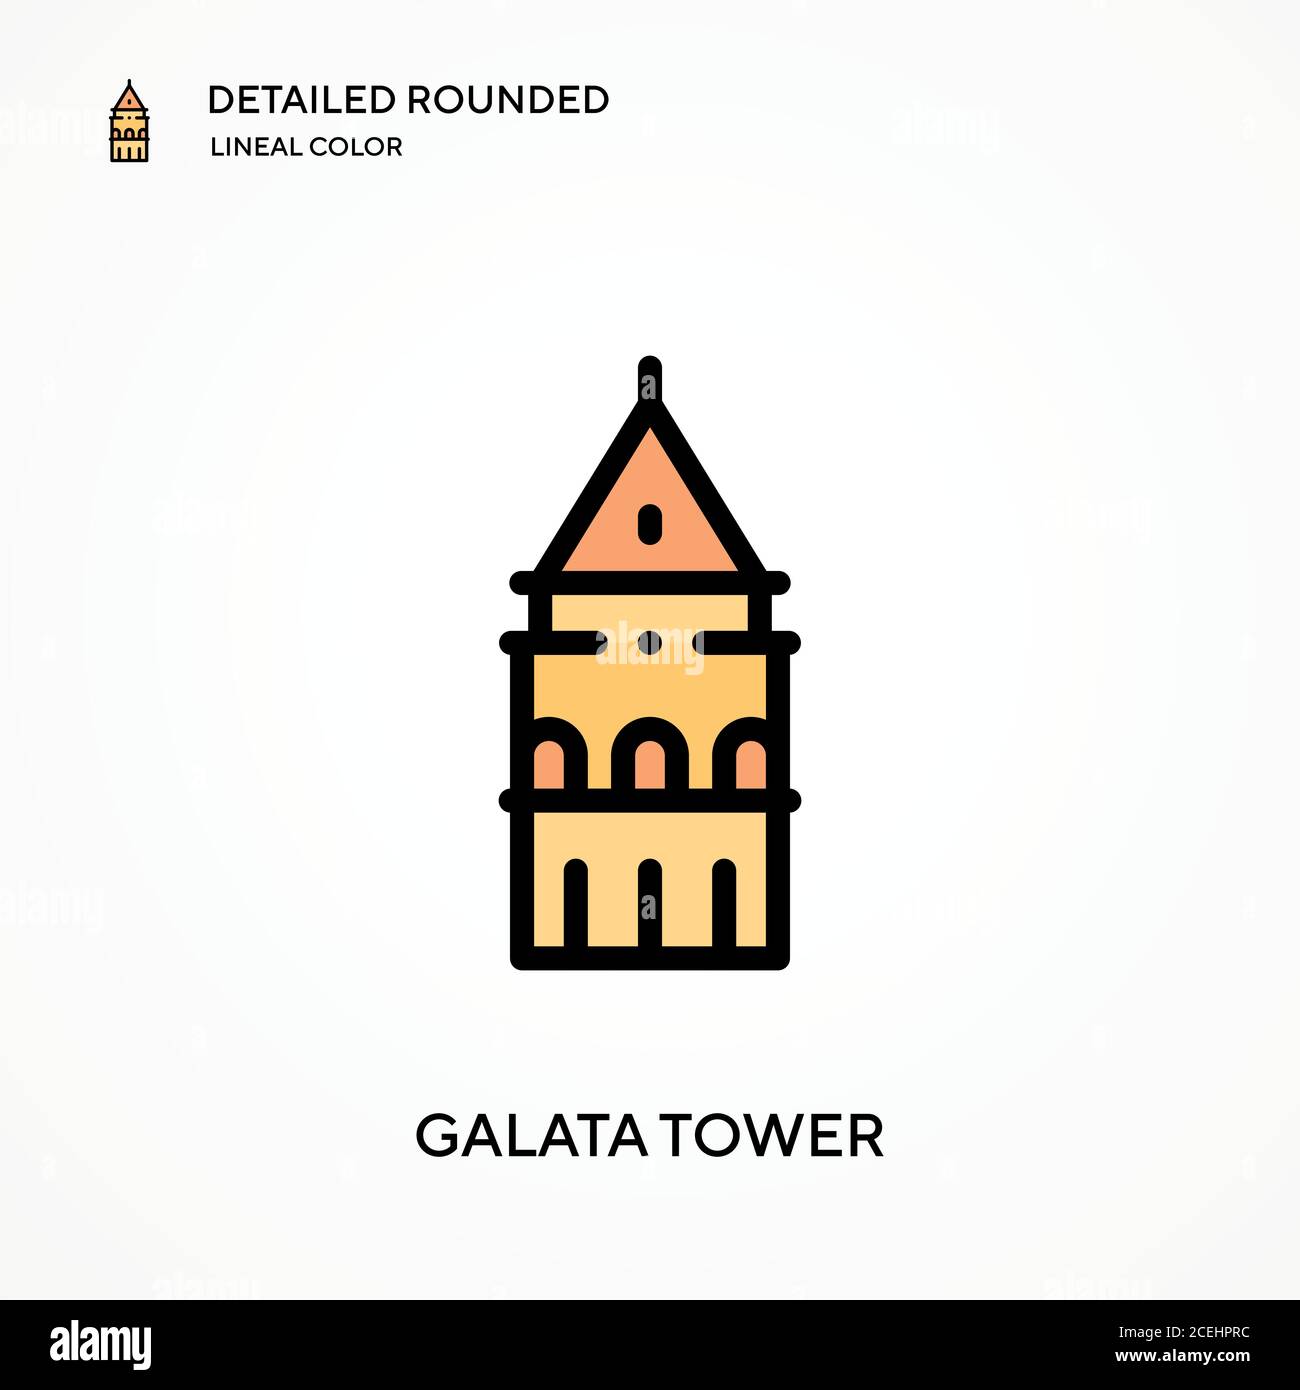 Galata Turm detaillierte abgerundete lineare Farbe Vektor-Symbol. Illustration Symbol Design Vorlage für Web mobile UI-Element. Perfekte Farbe modernes Piktogramm Stock Vektor